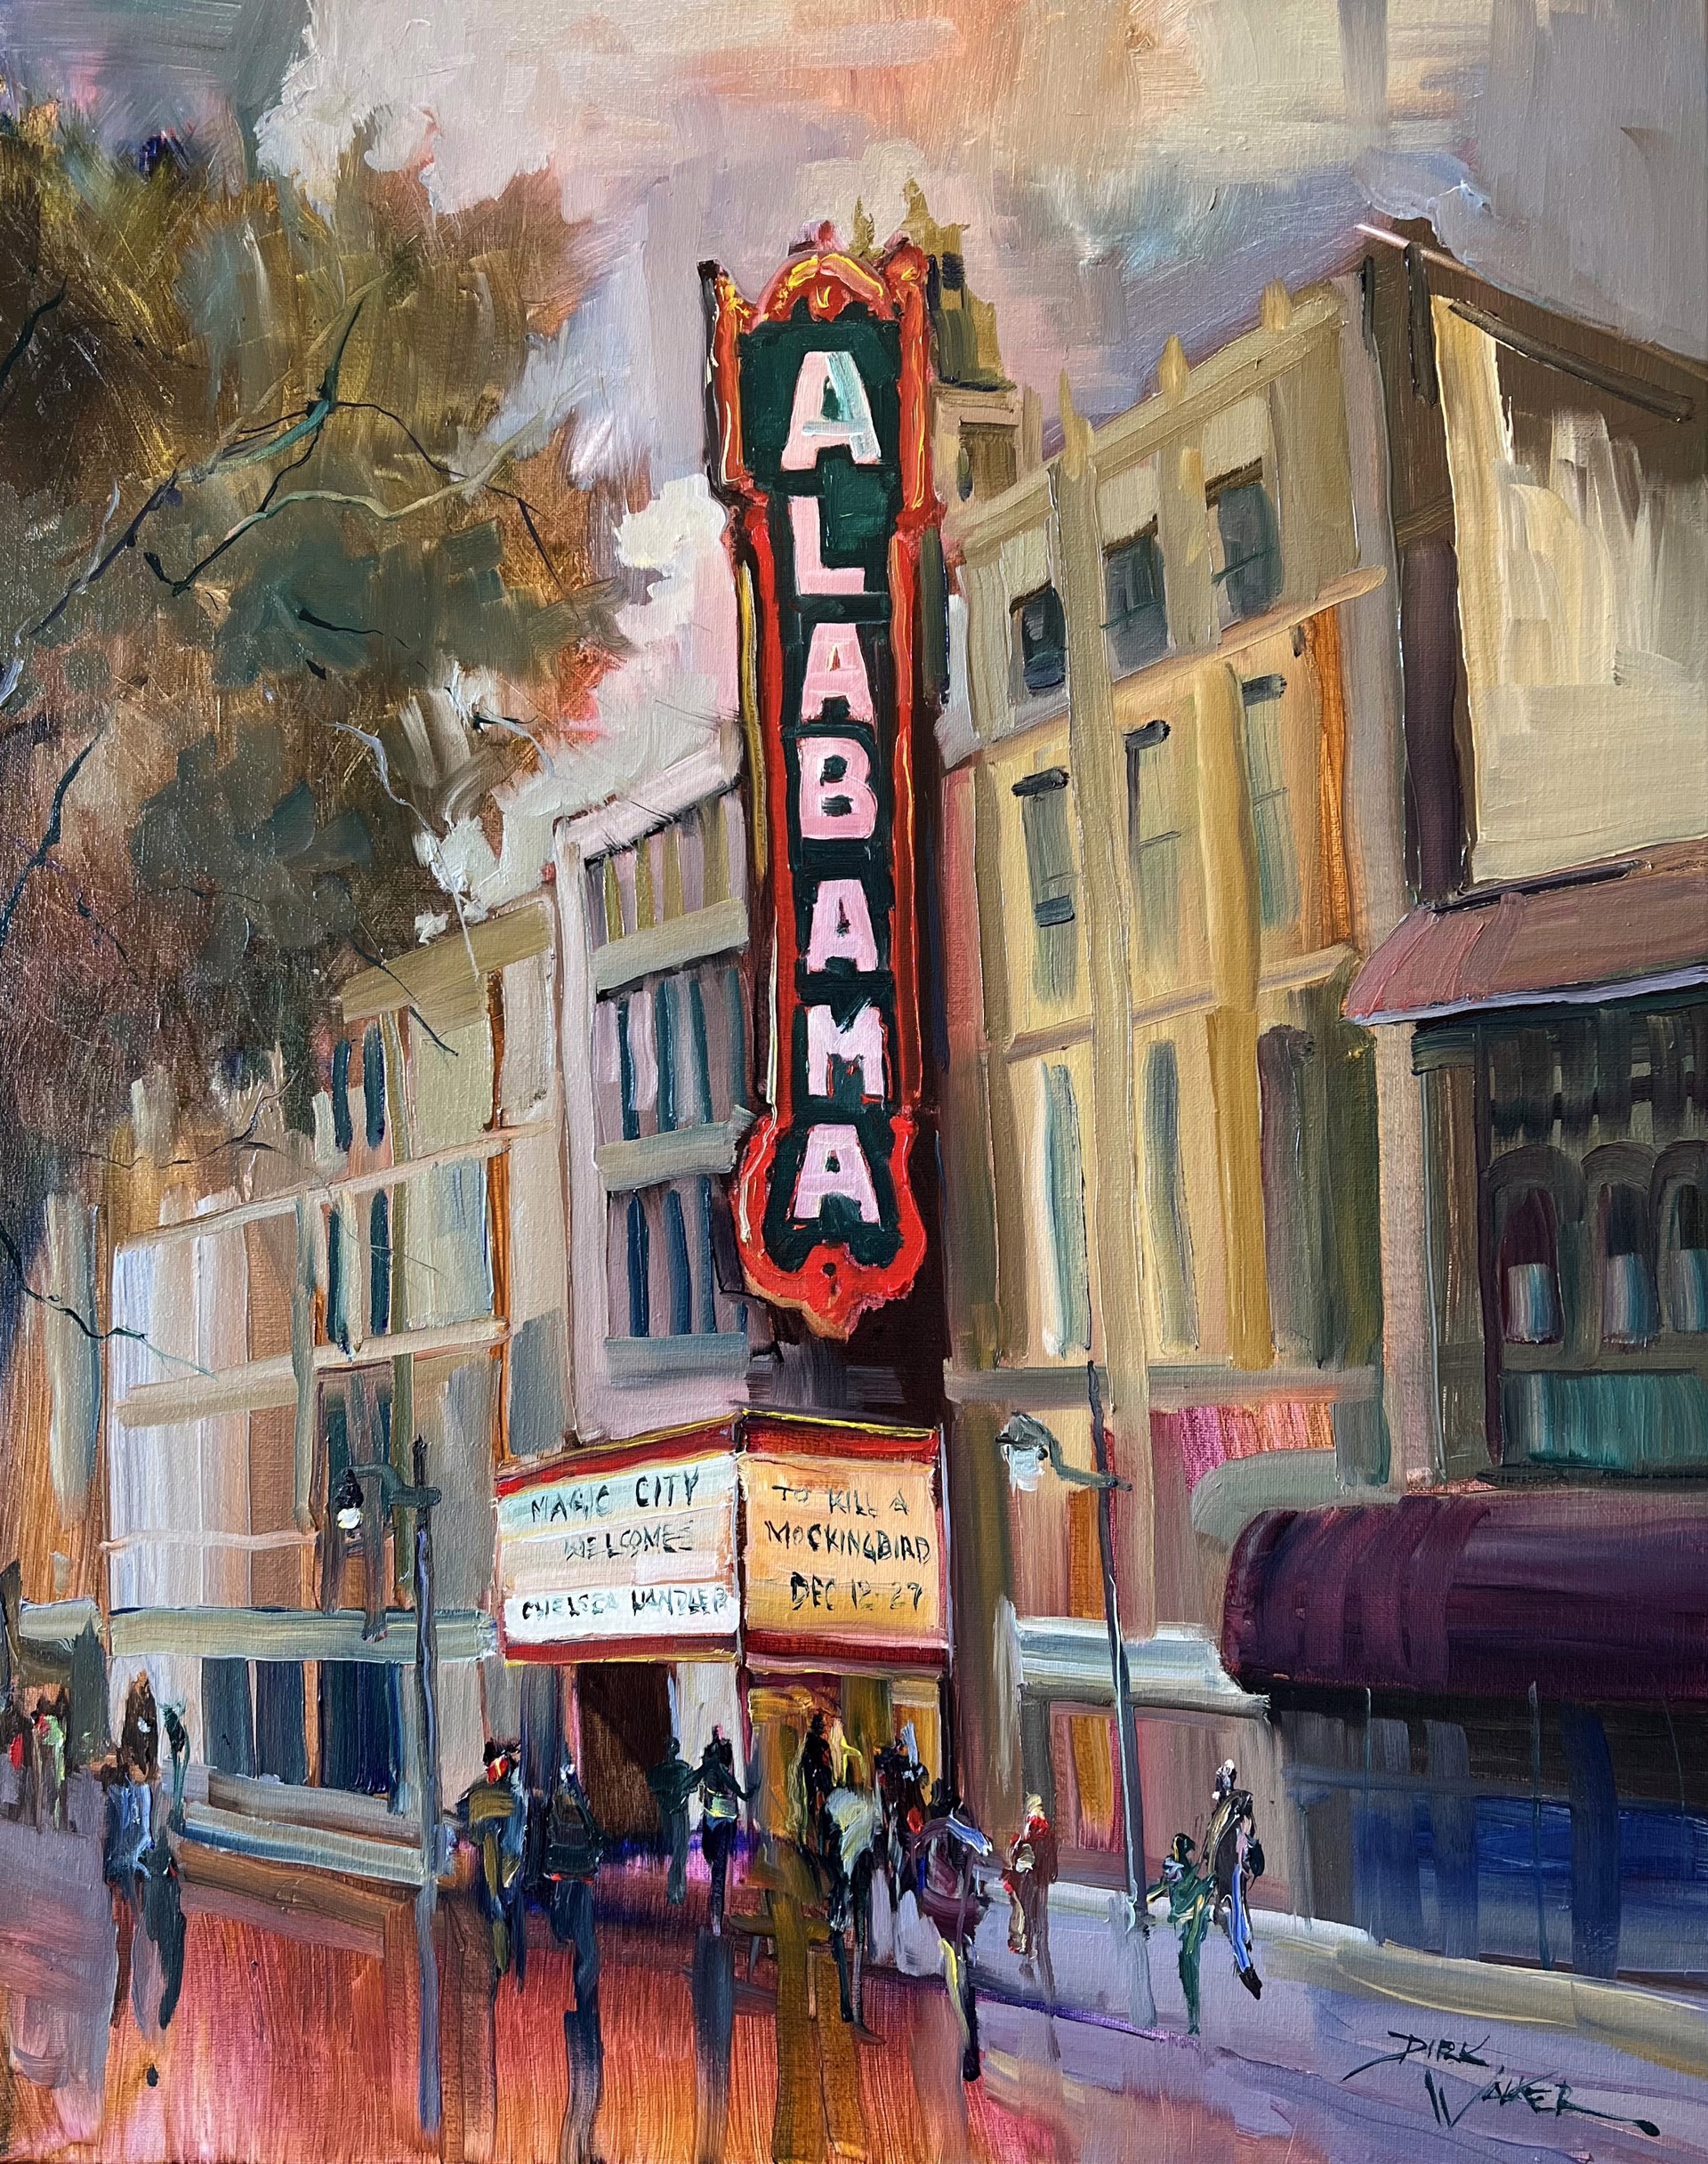 Alabama Theatre by Dirk Walker